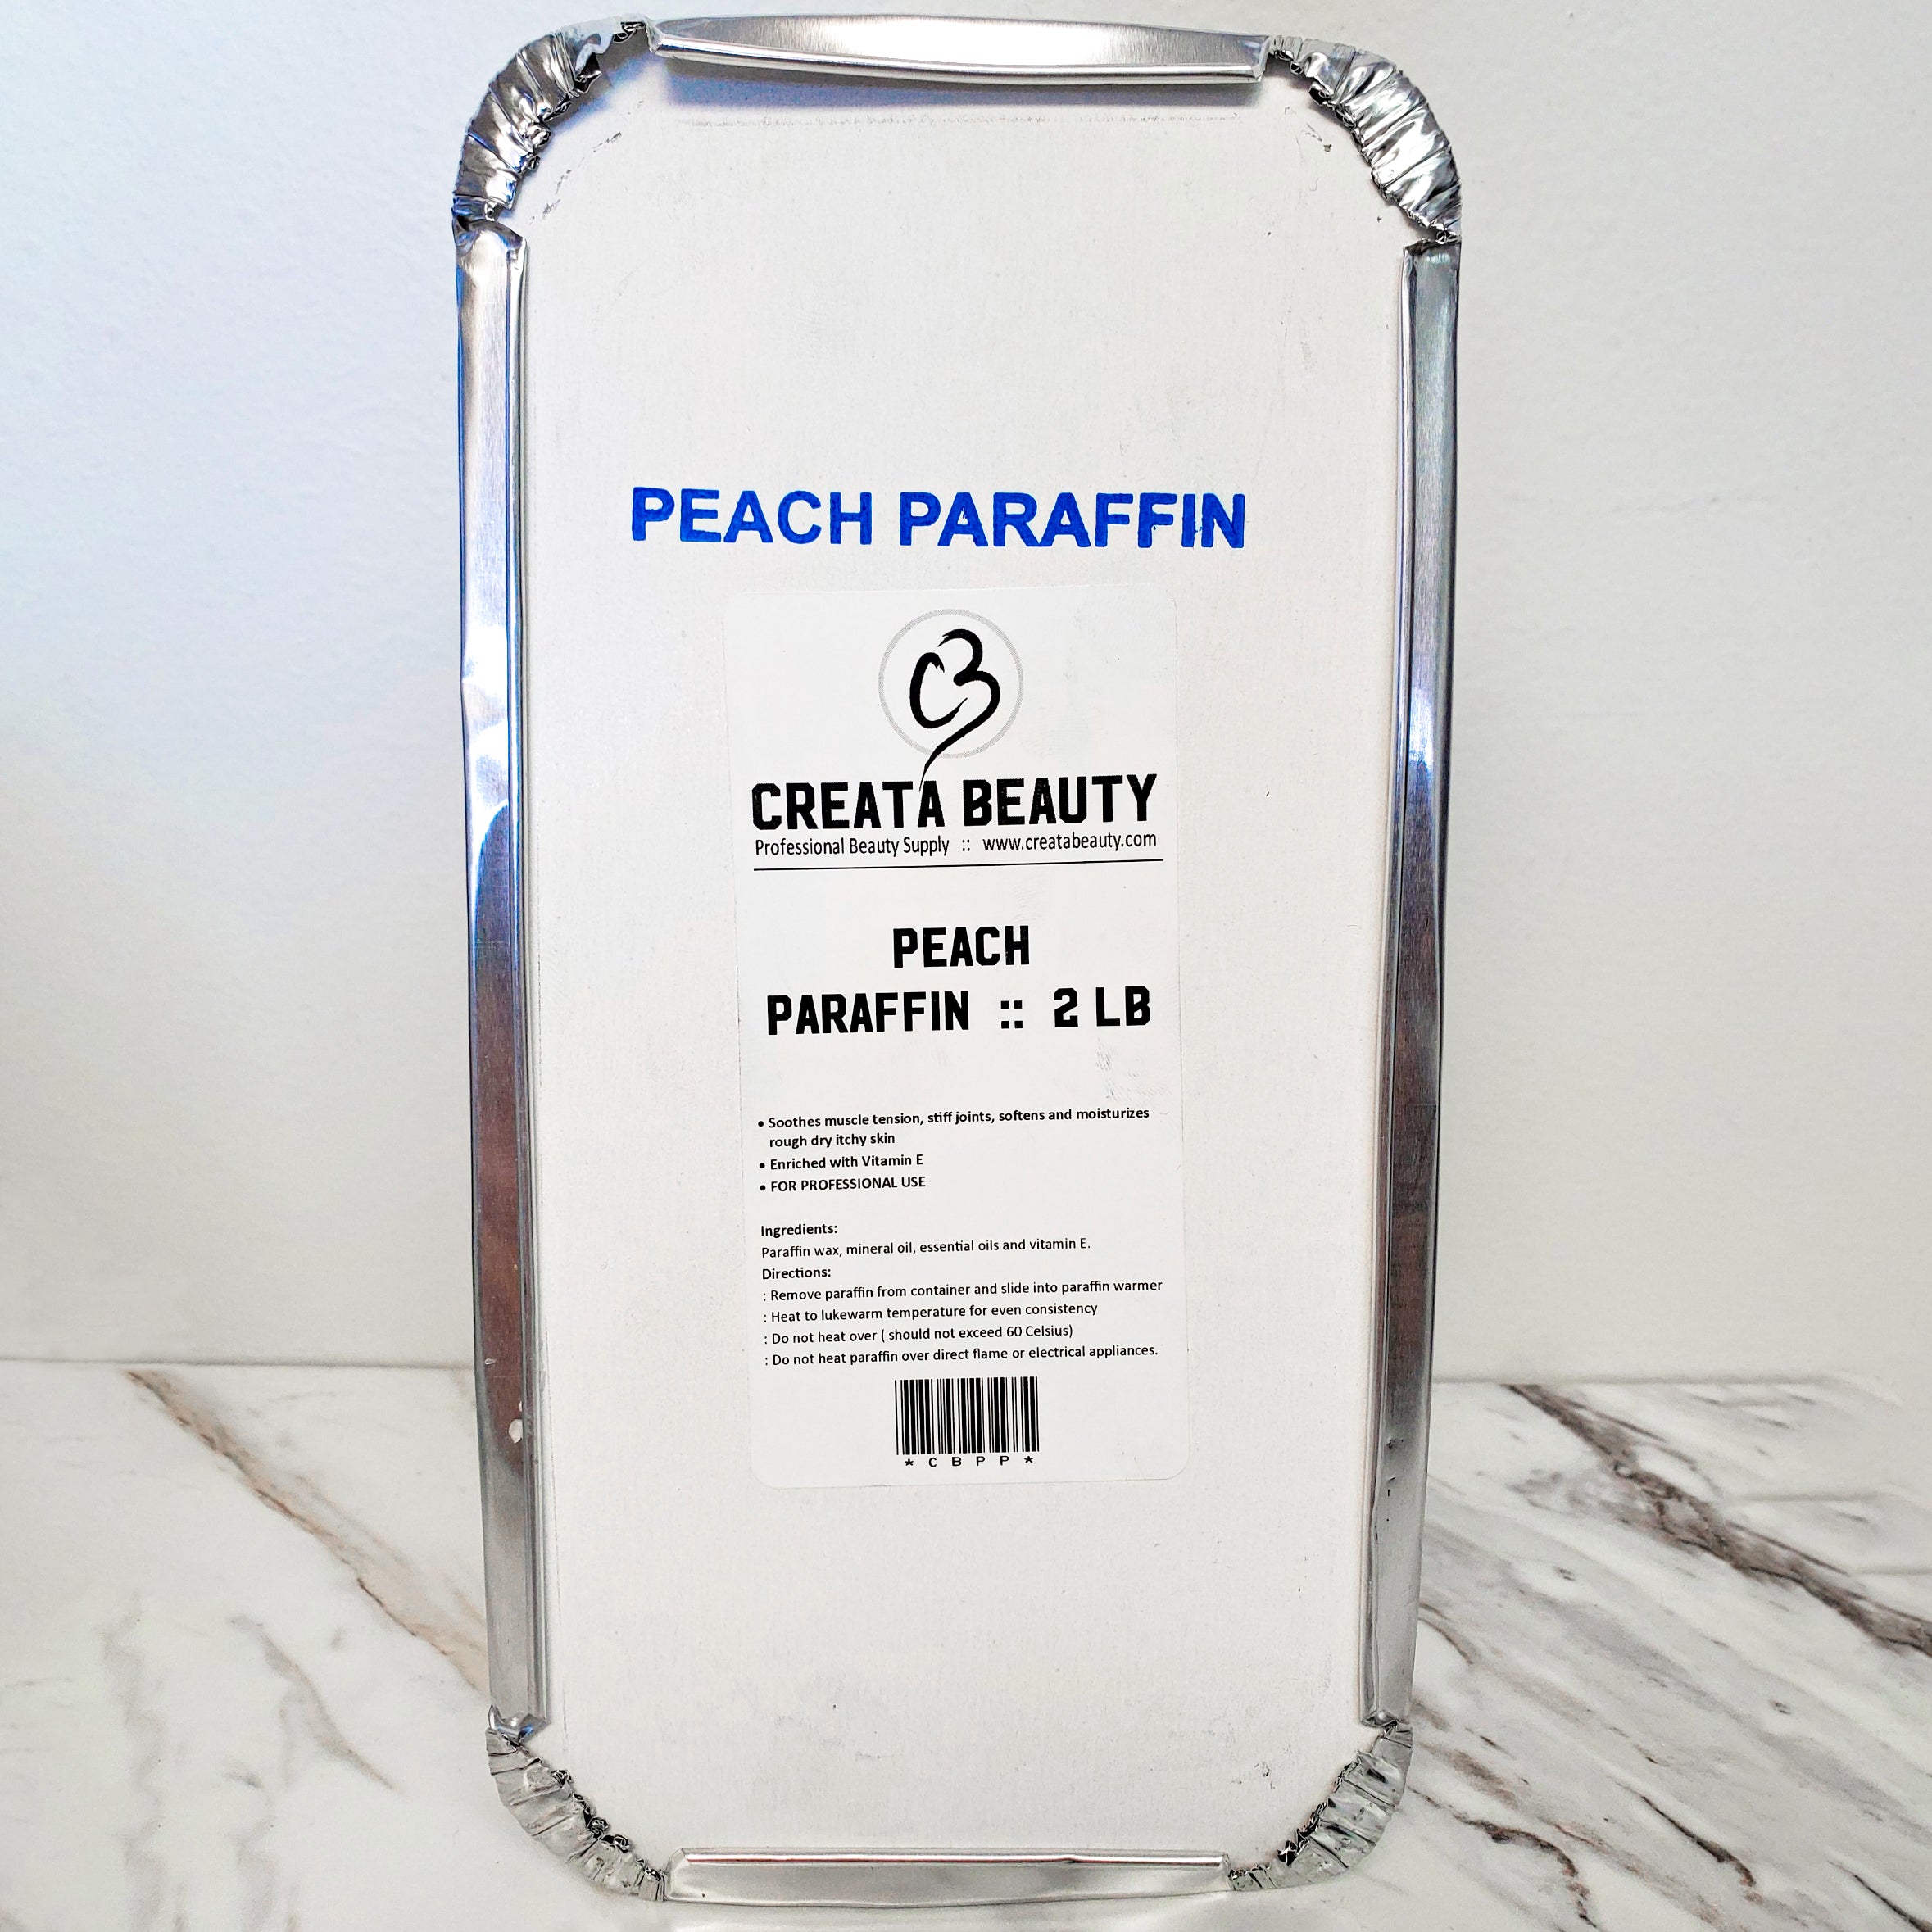 Creata Beauty Paraffin 2lb - Peach - Creata Beauty - Professional Beauty Products